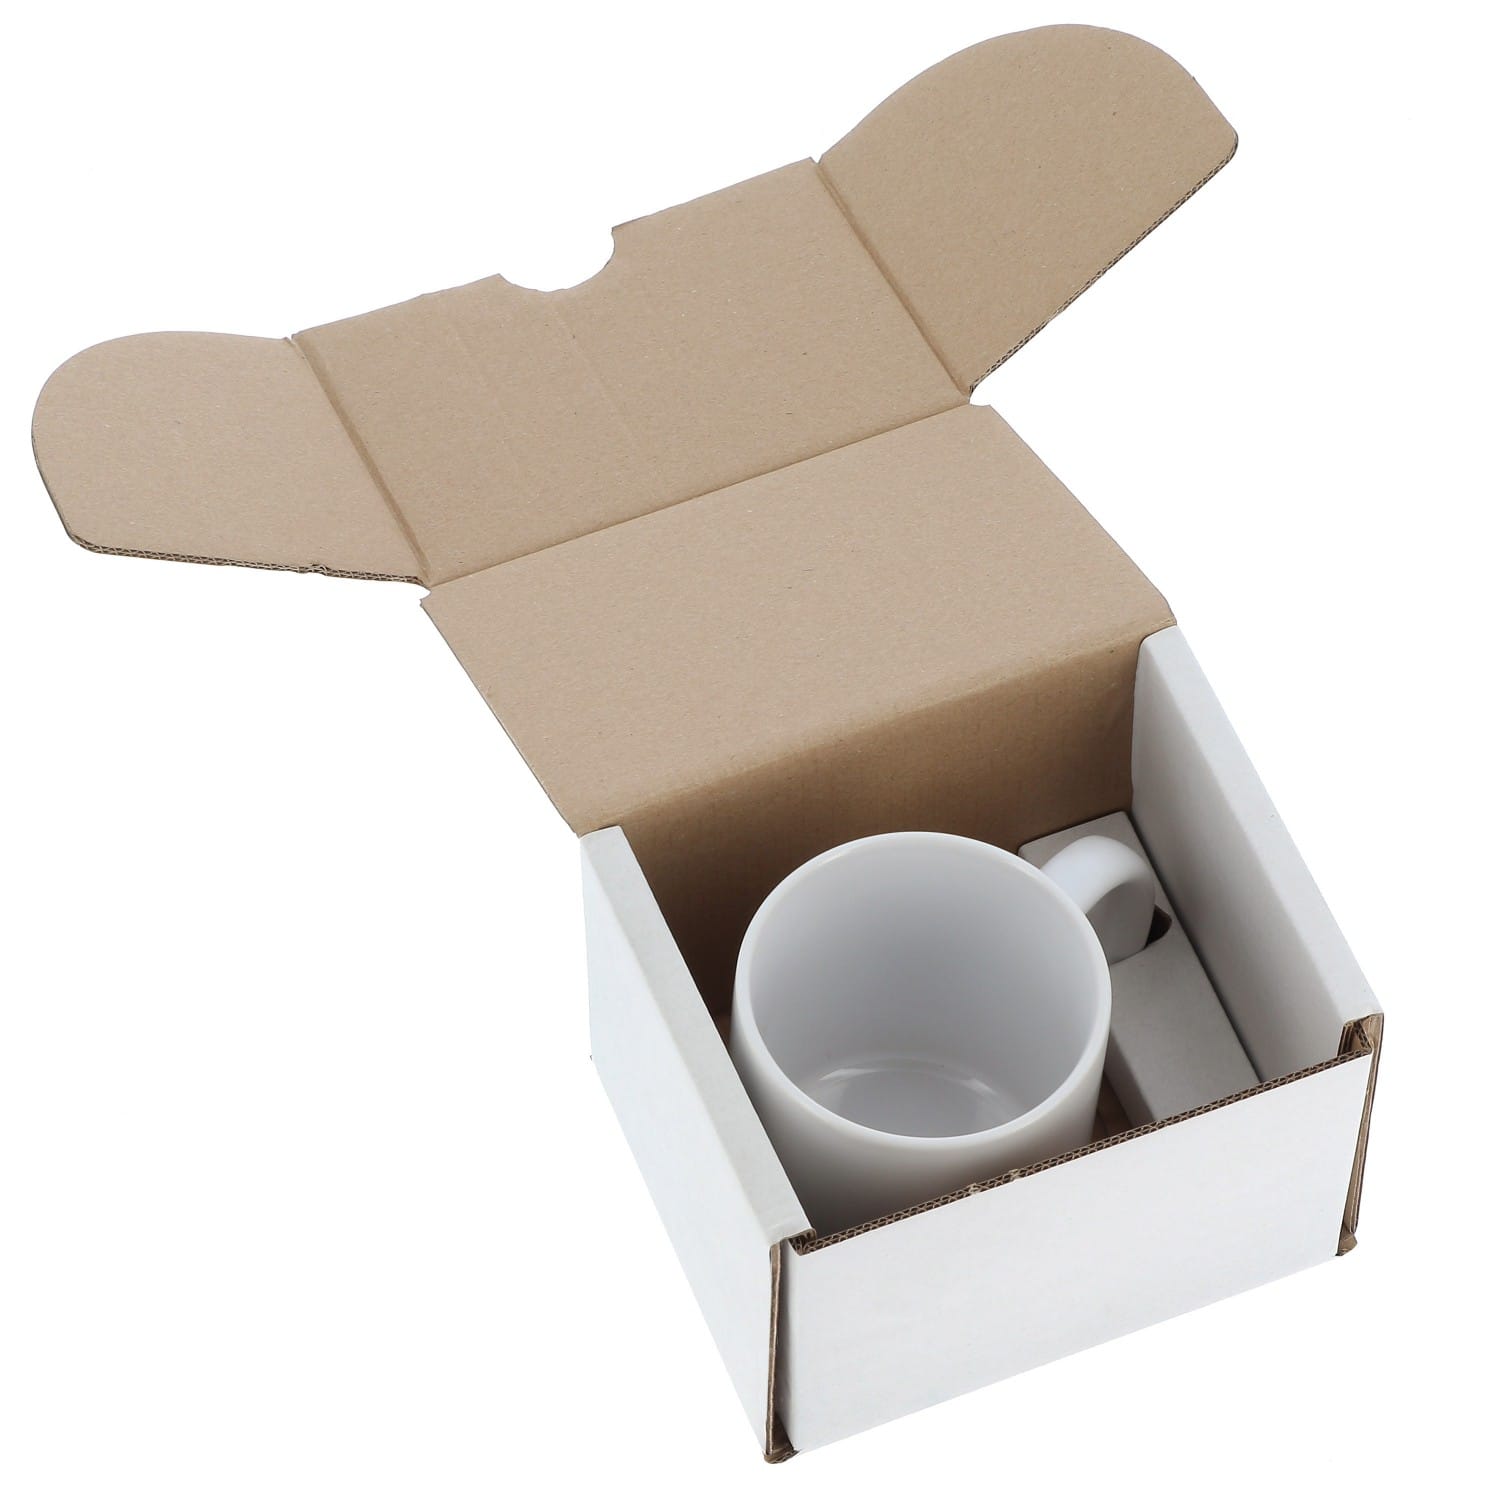 Emballage - Boîte blanche carton pour Mug 330ml (11oz) et pour